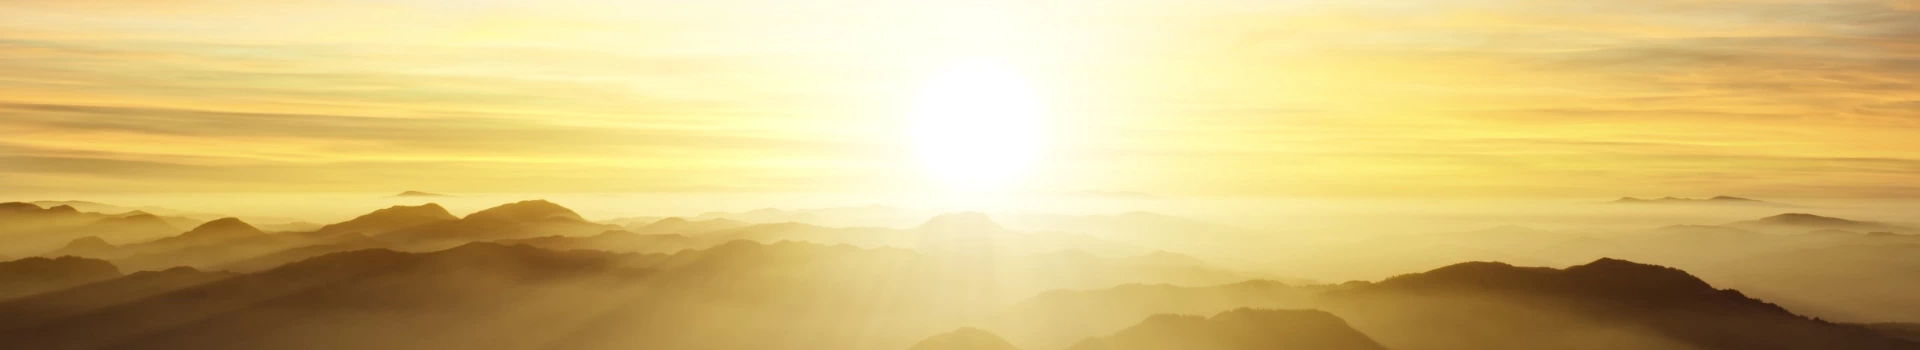 banner - wschód słońca w górach